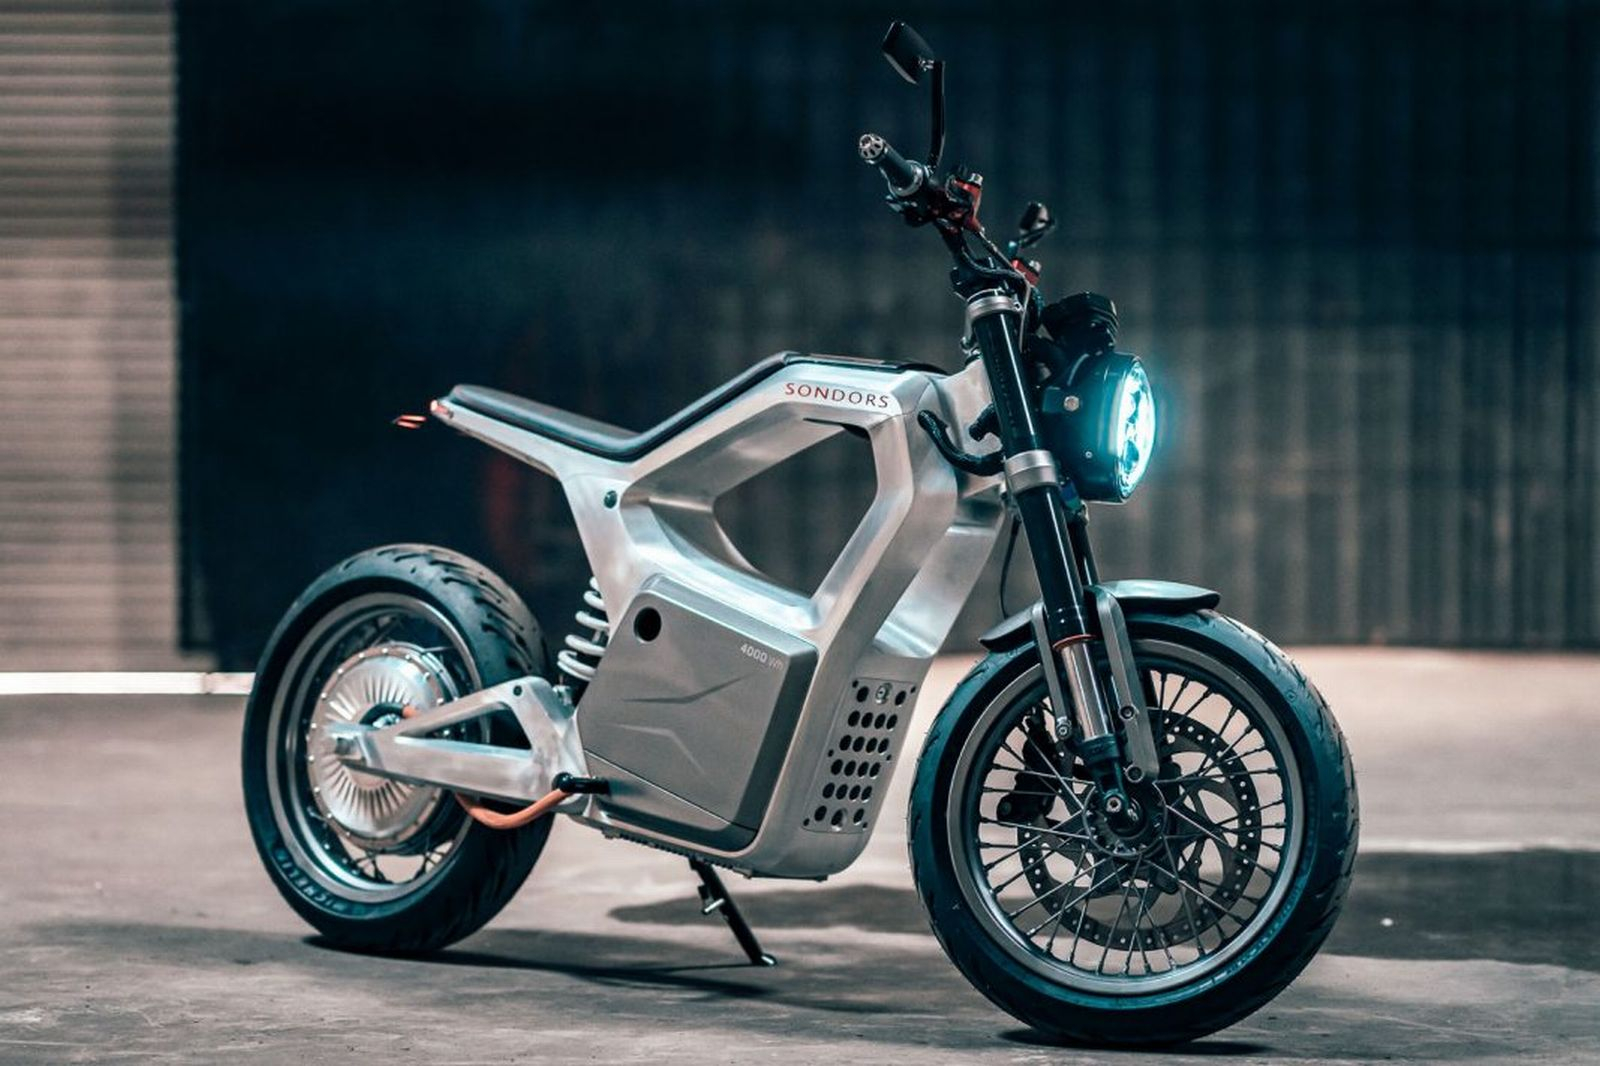 2022-Sondors-Metacycle-first-look-electric-motorcycle-urban-commuter-9-1068x712.jpg